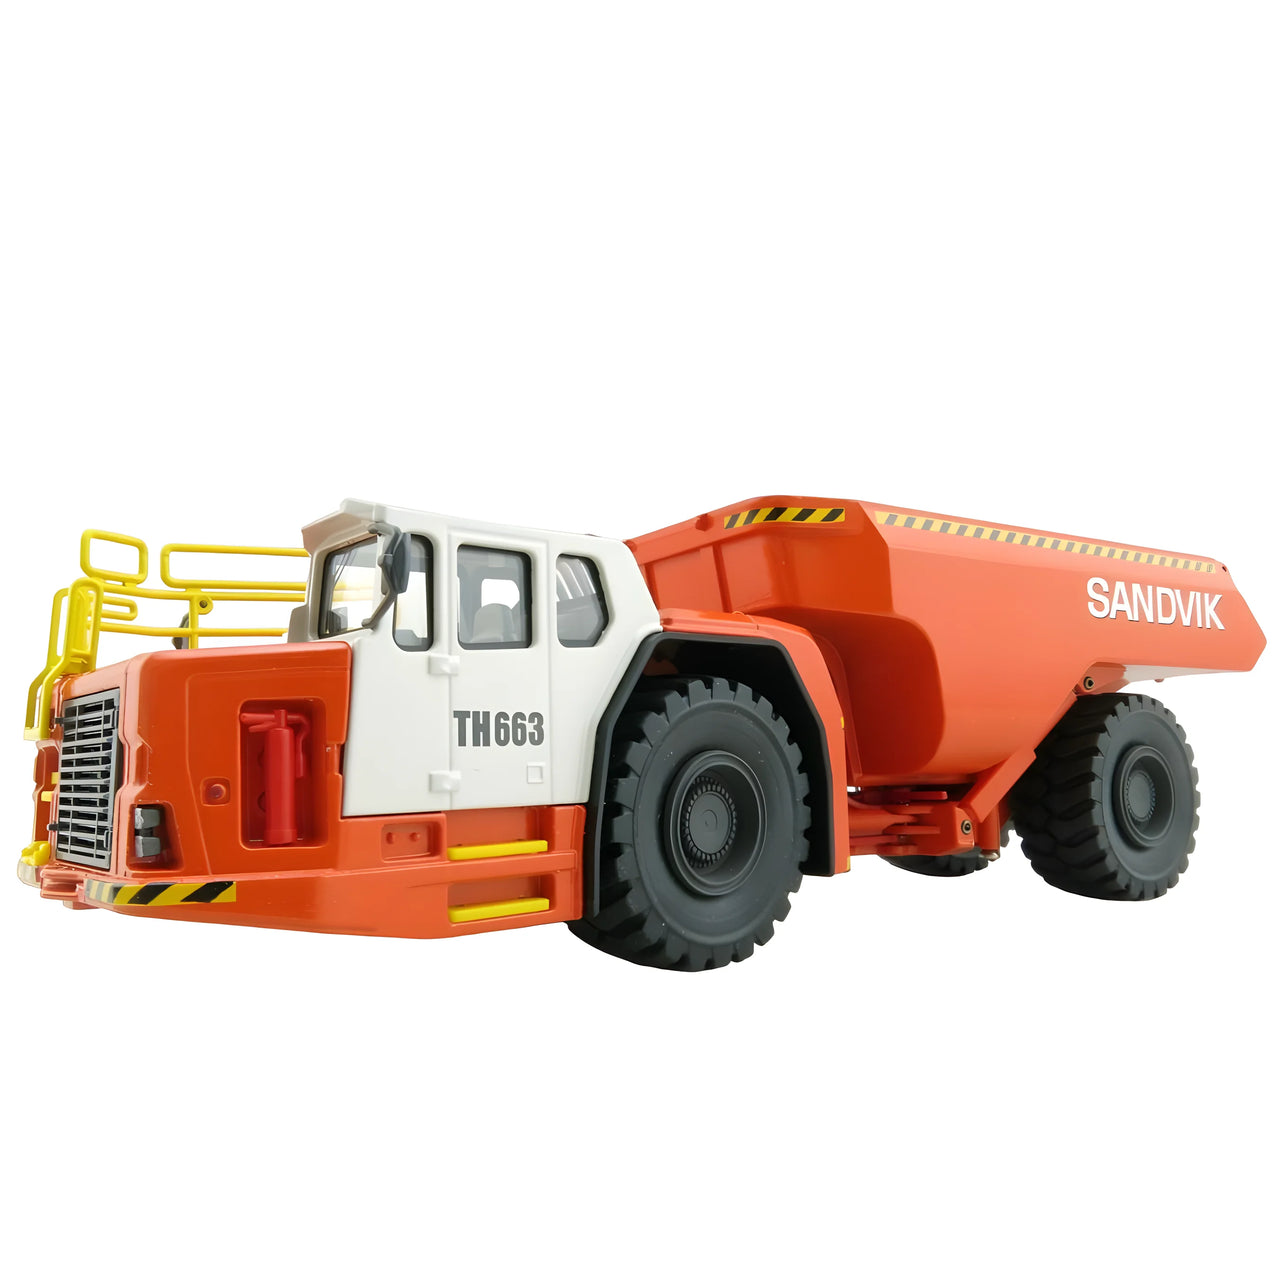 2767 Sandvik TH663 Low Profile Mining Truck 1:50 Scale